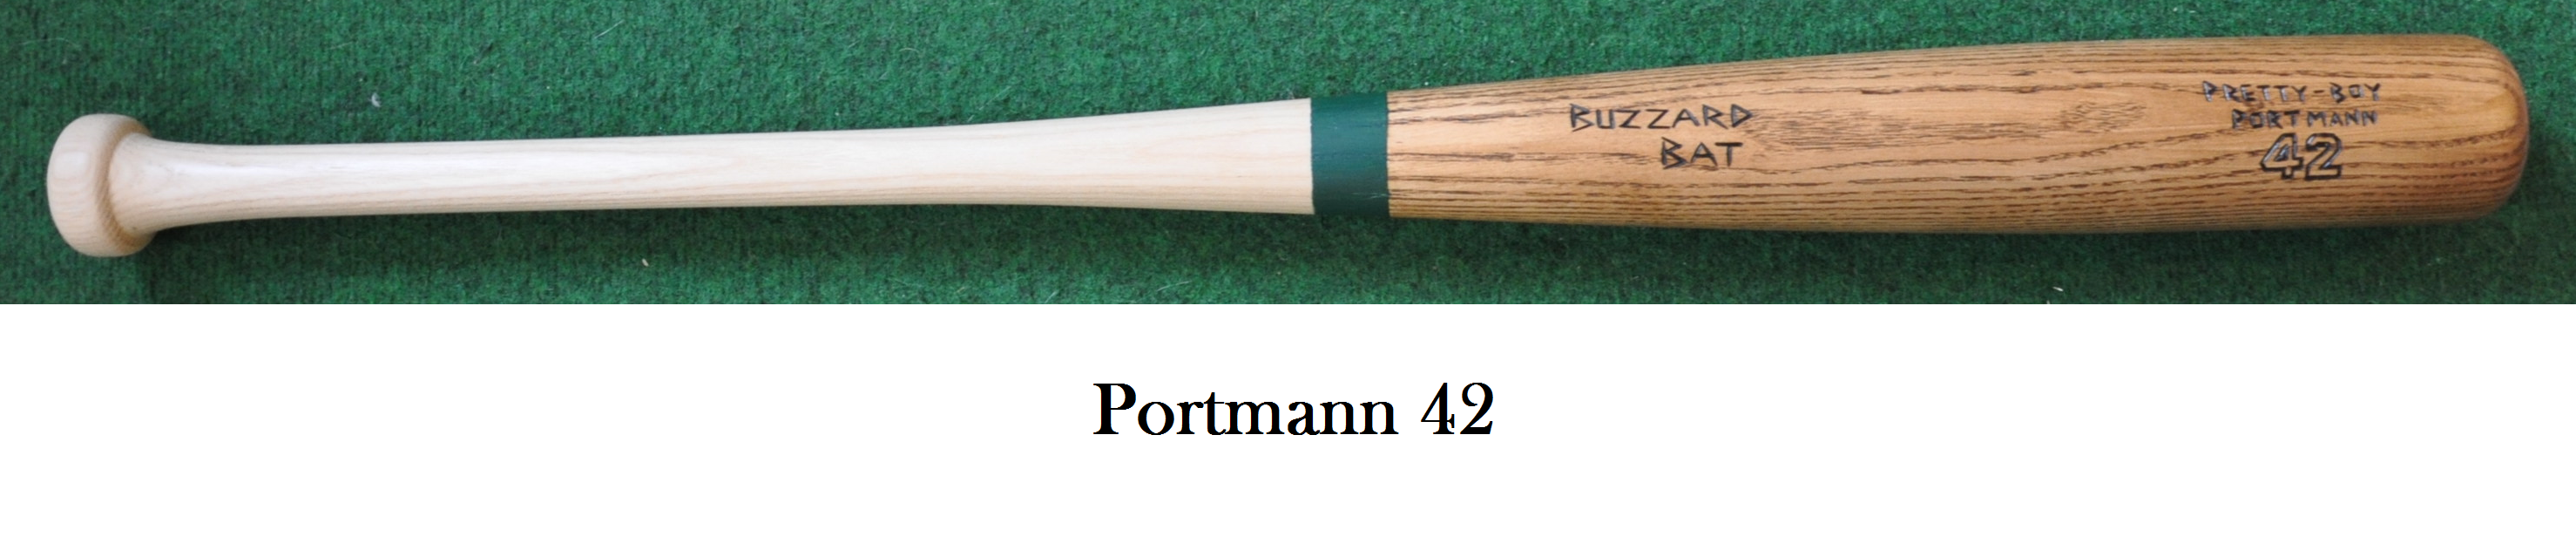 Portmann 42